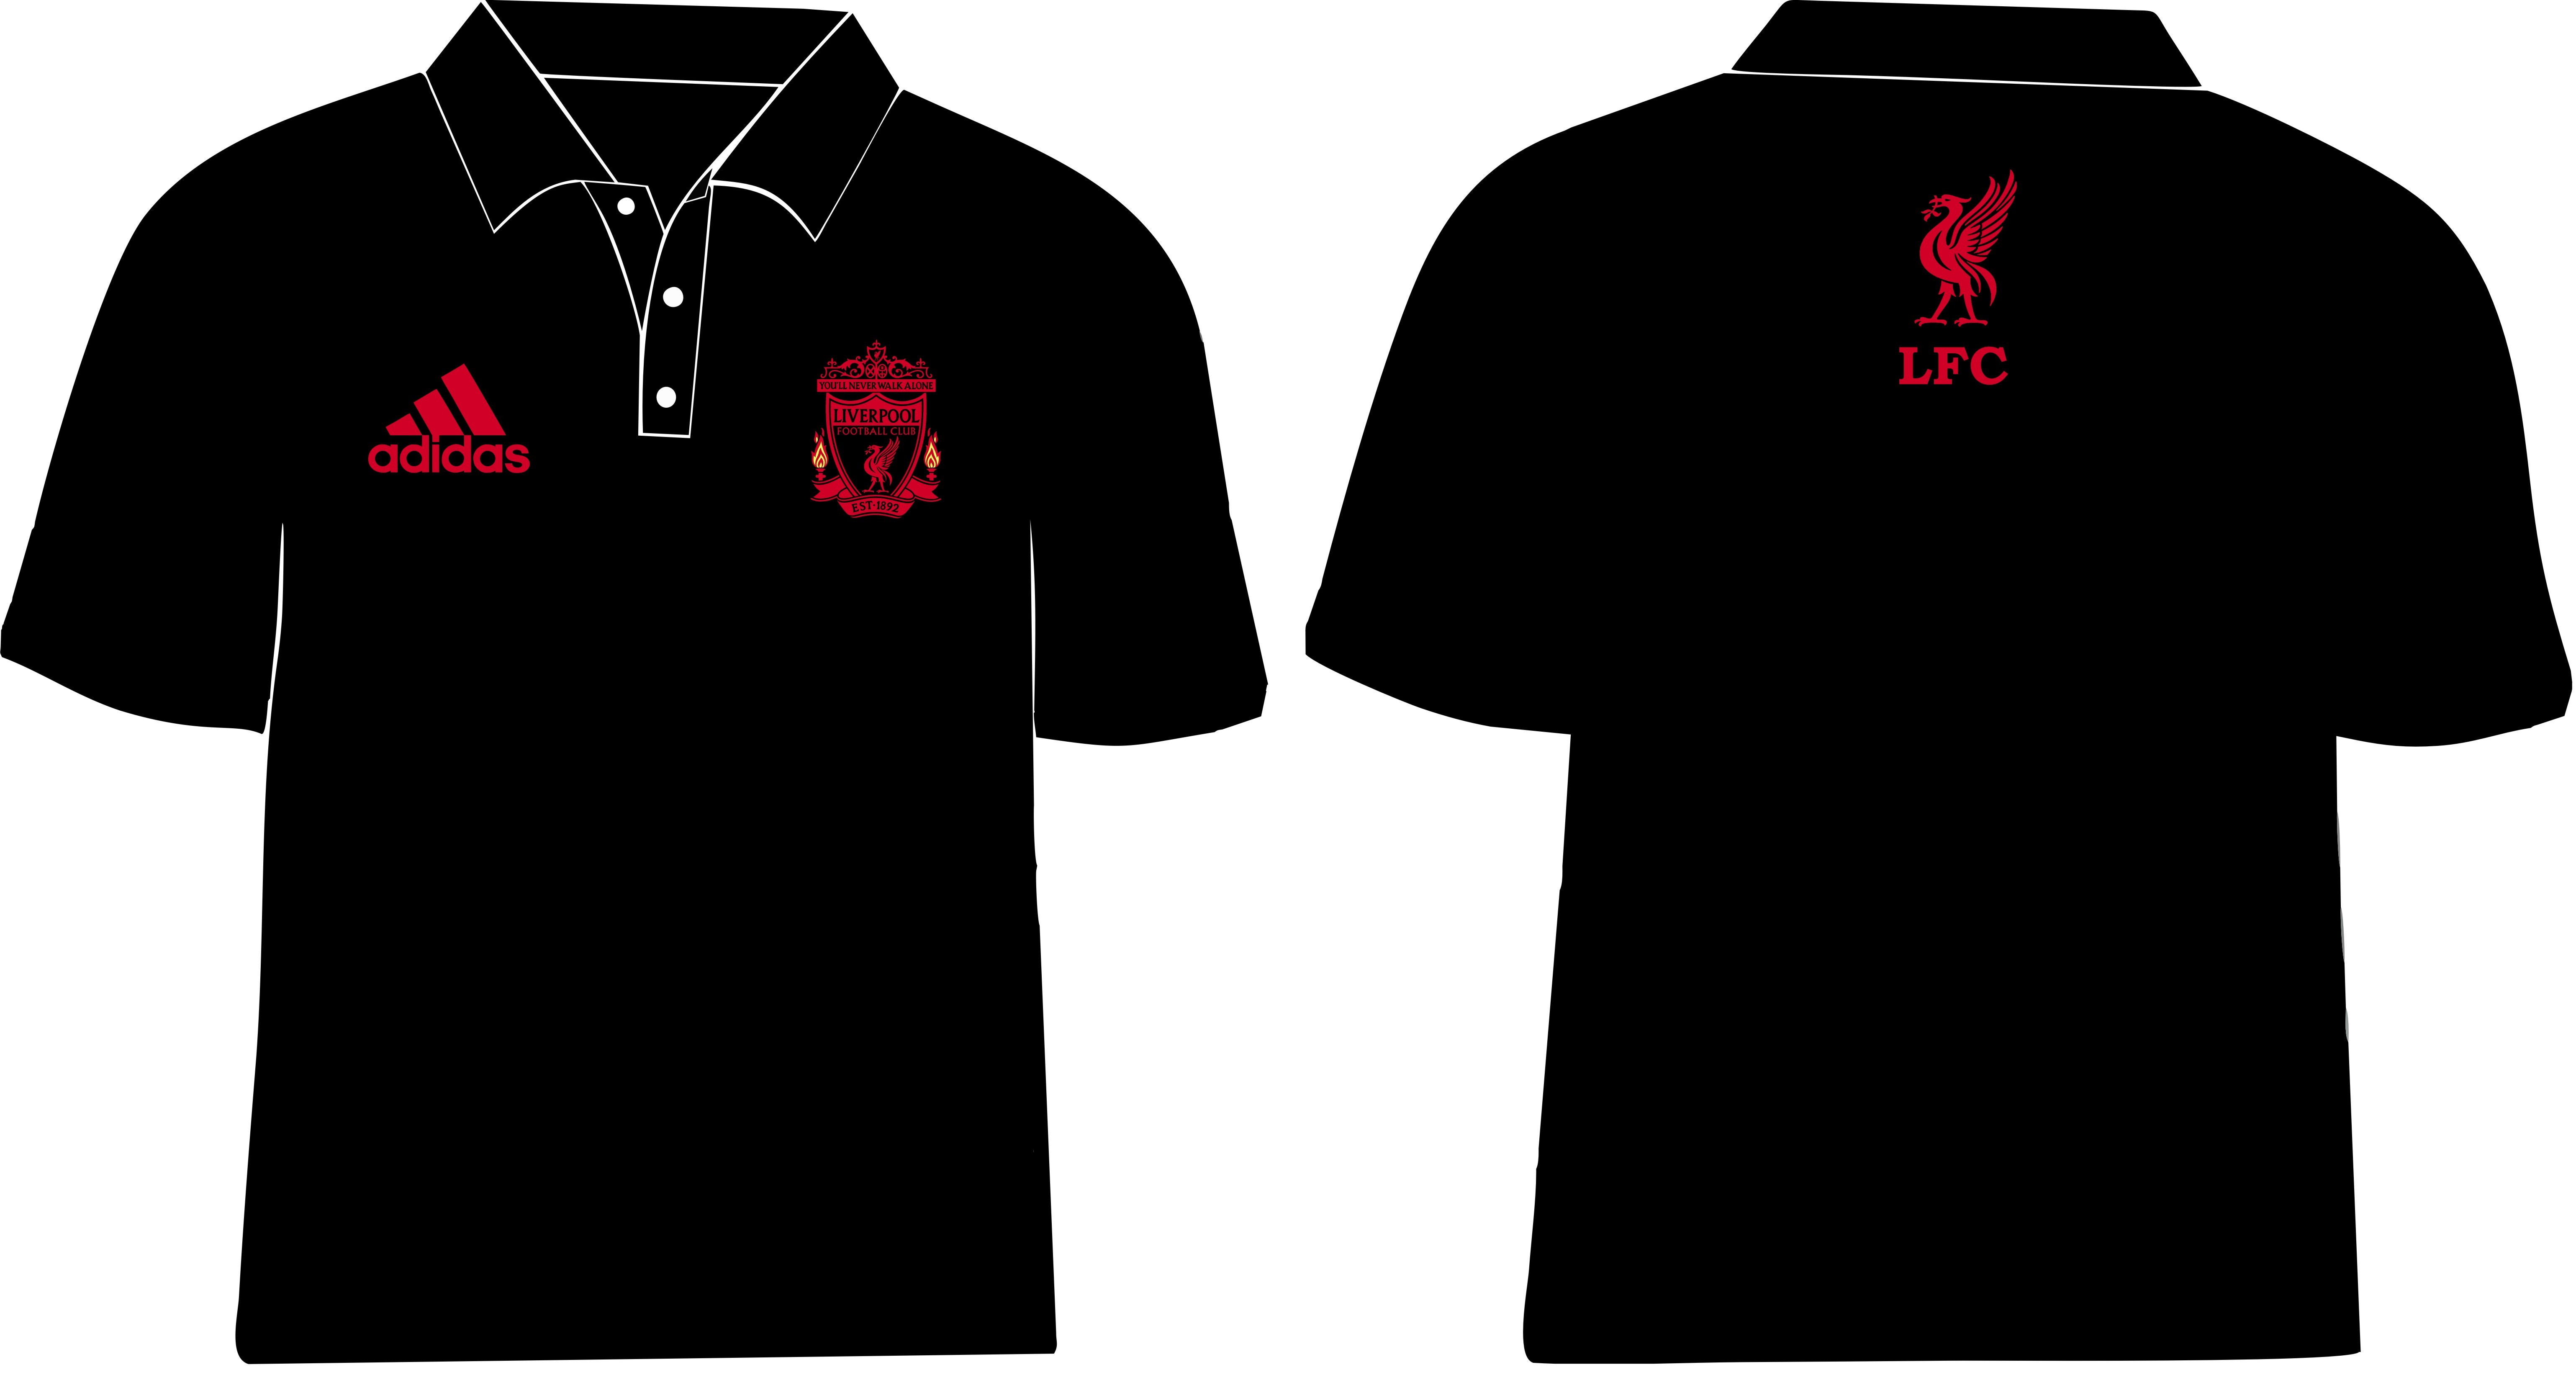  Kaos  Polo  Liverpool Fashion dan Merchandise